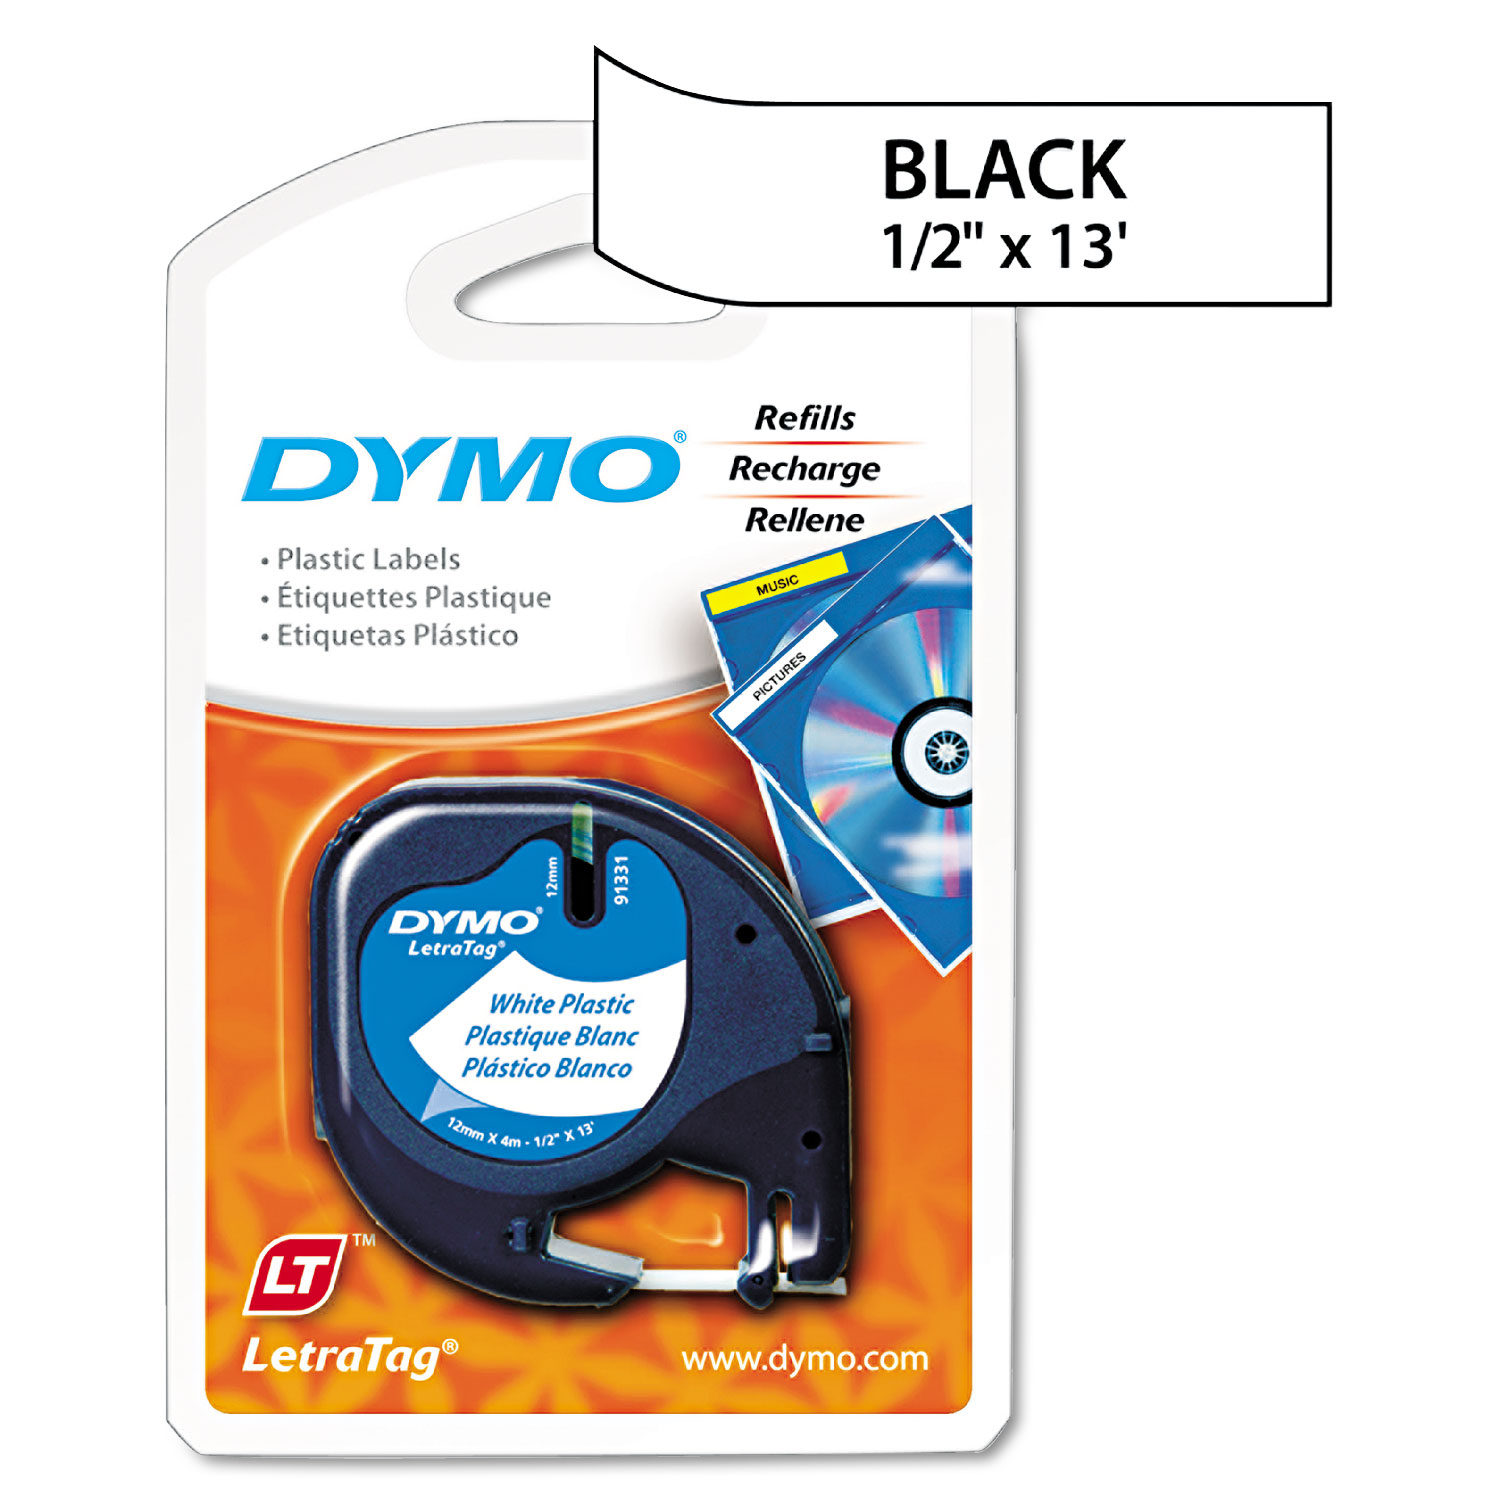  DYMO 91331 LetraTag Plastic Label Tape Cassette, 0.5 x 13 ft, White (DYM91331) 